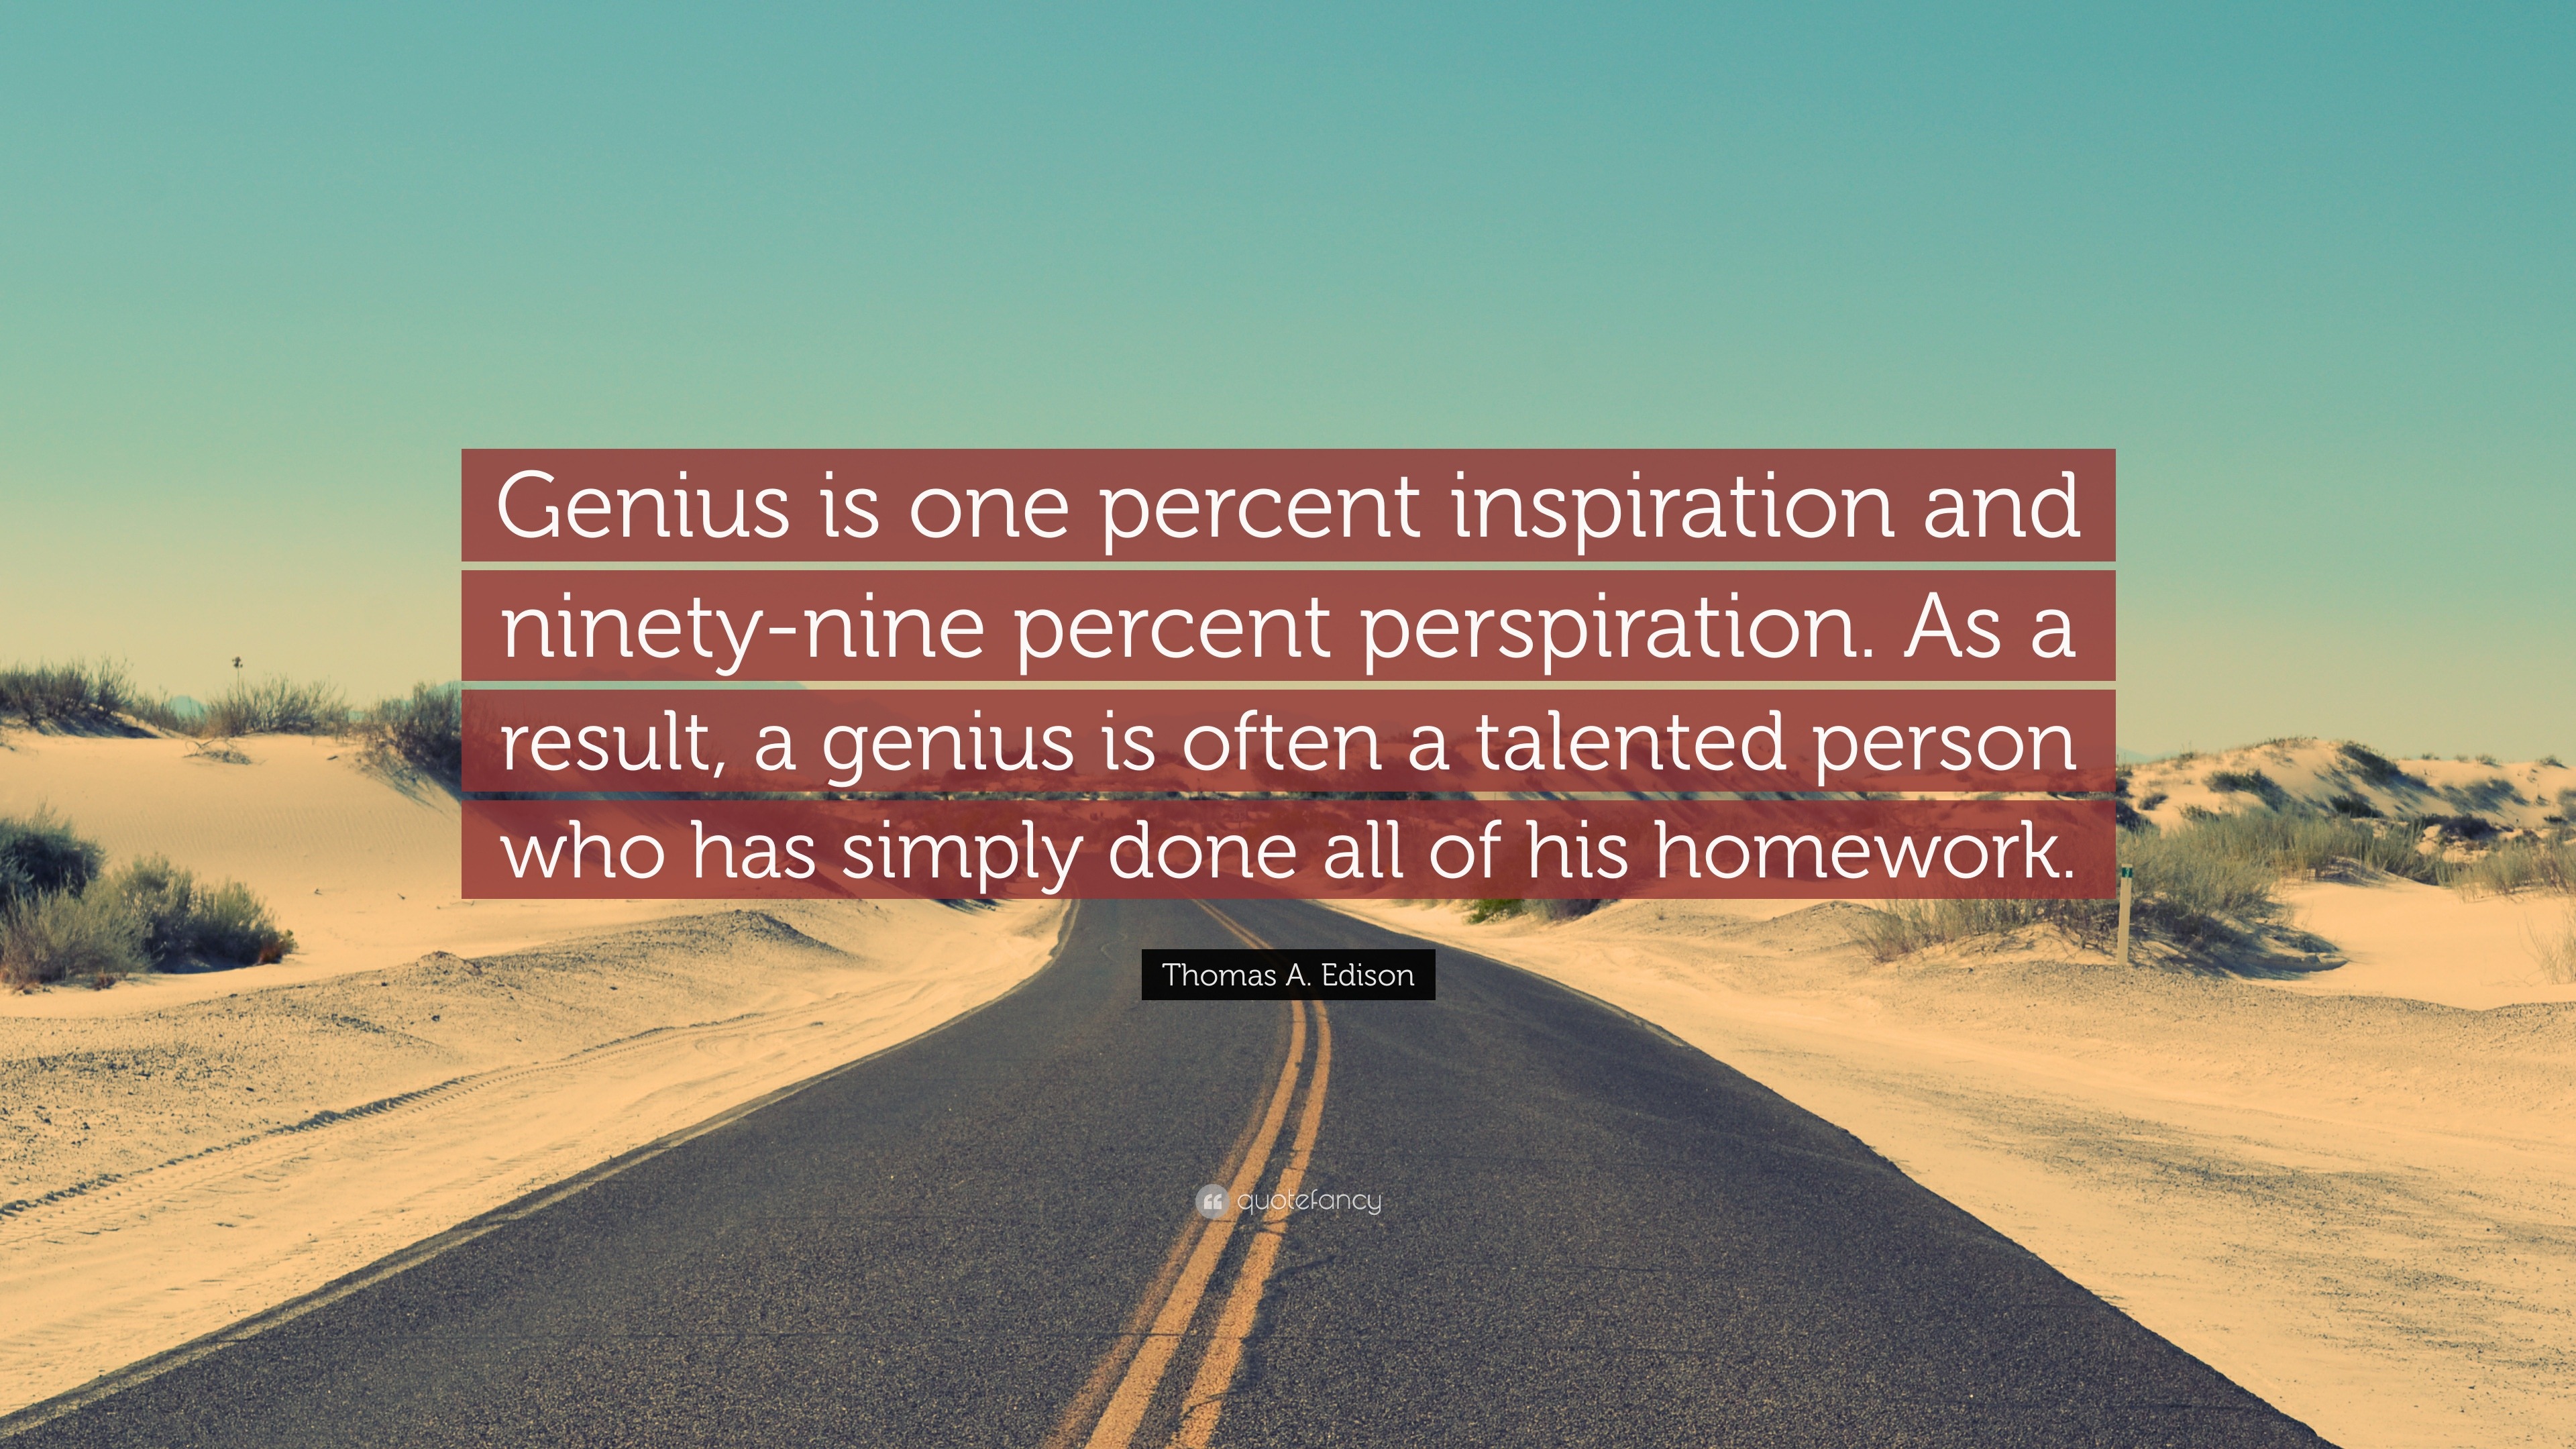 genius is 1 percent inspiration and 99 percent perspiration